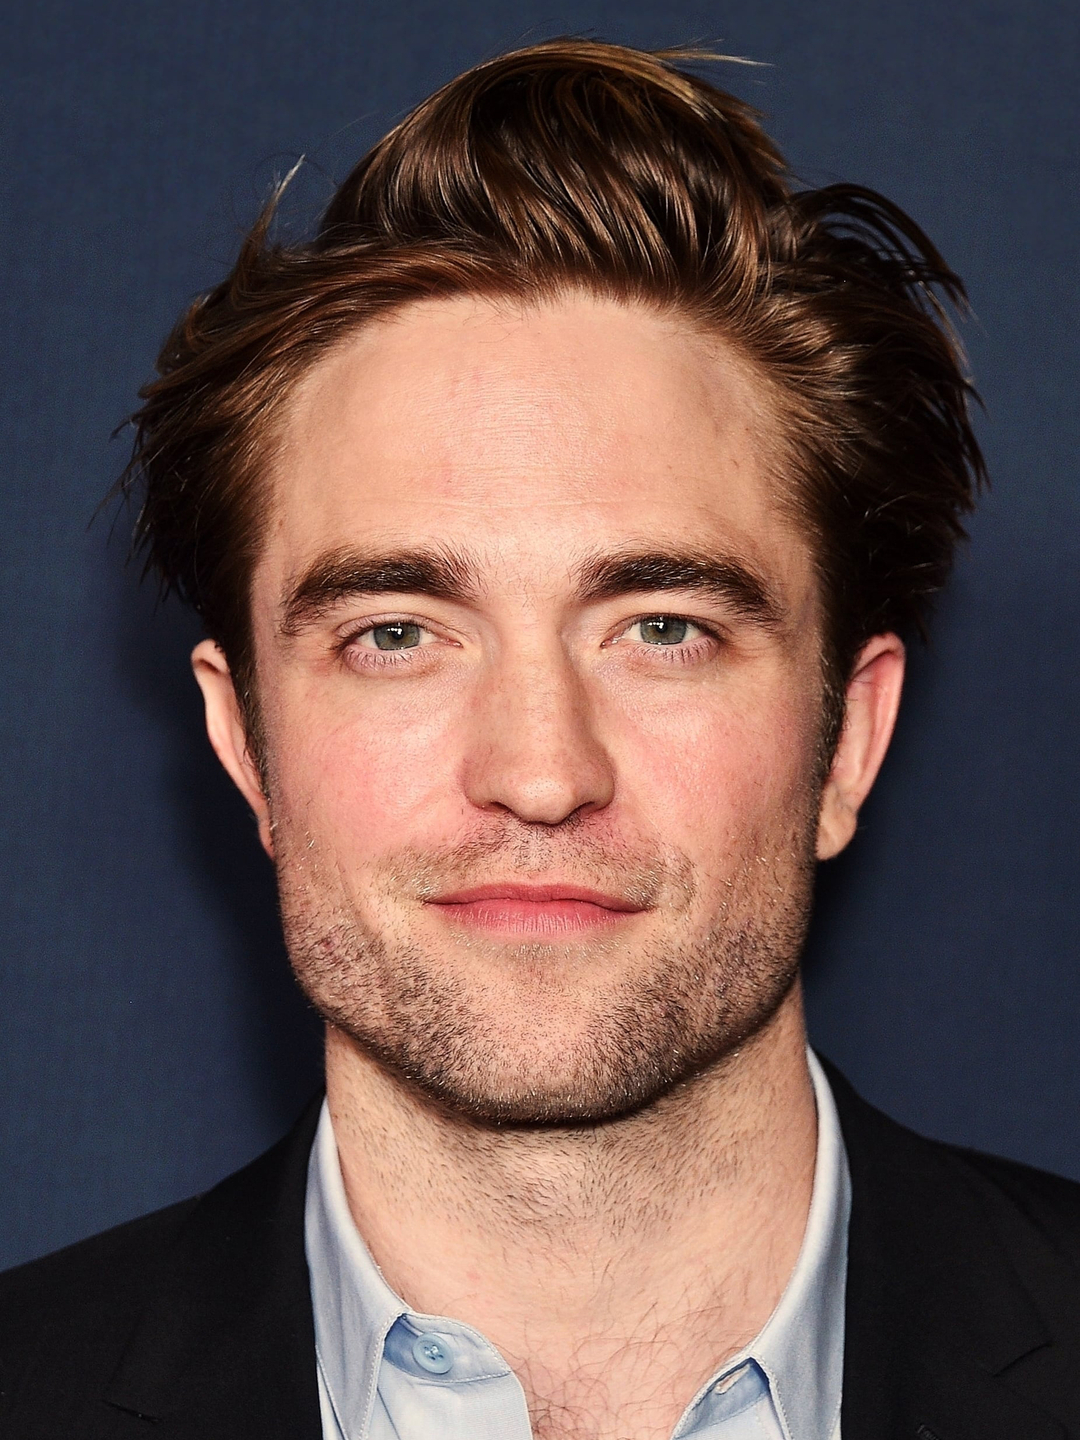 Robert Pattinson age